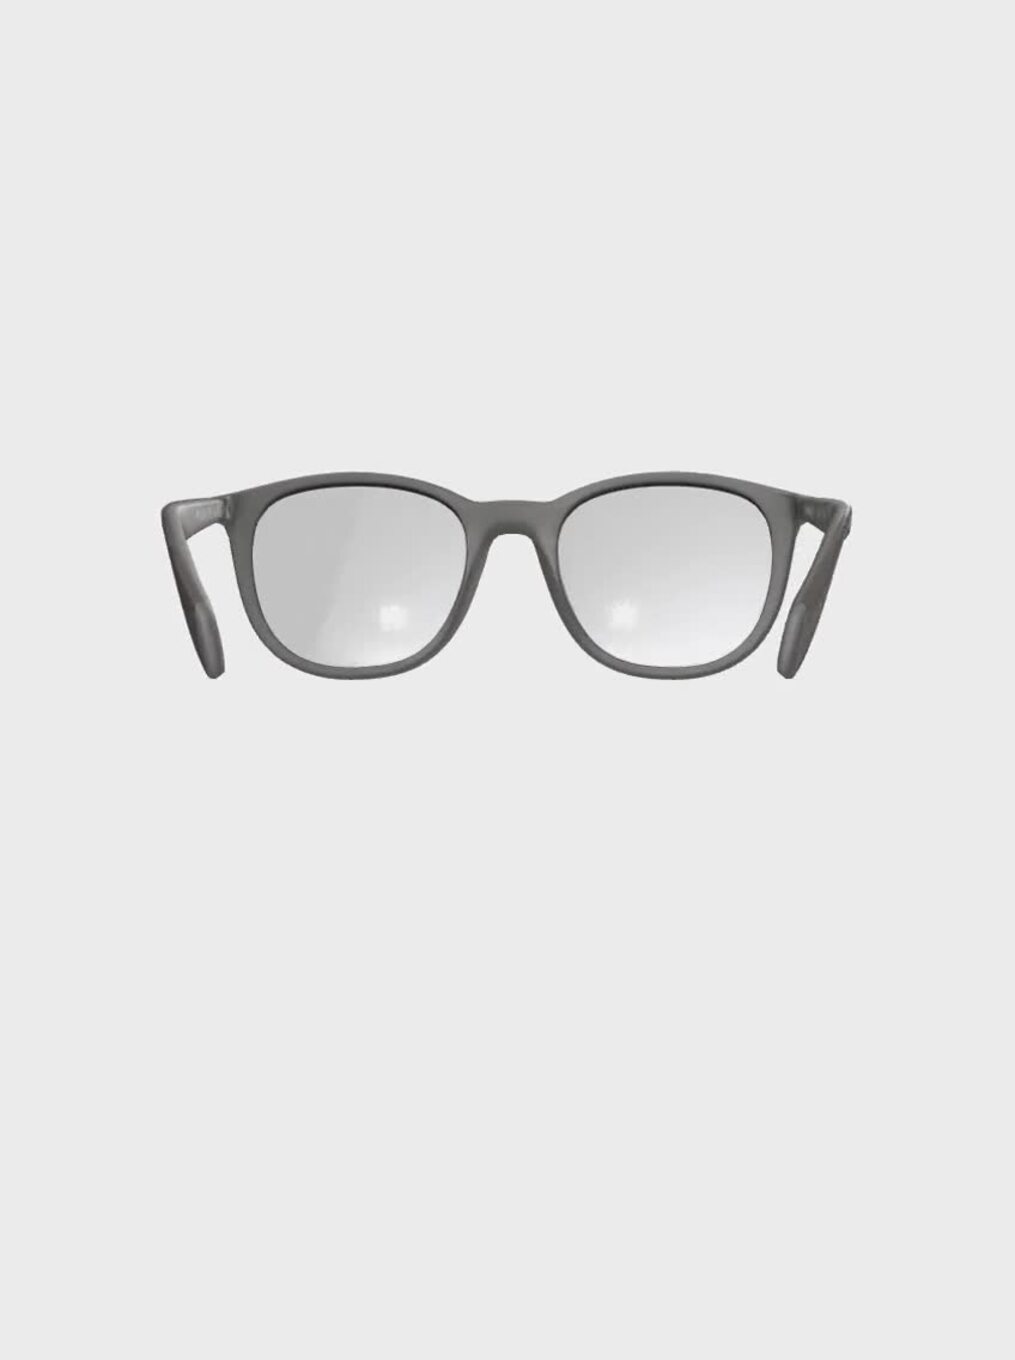 Emporio Armani Men's Sunglasses EA4216U | CoolSprings Galleria